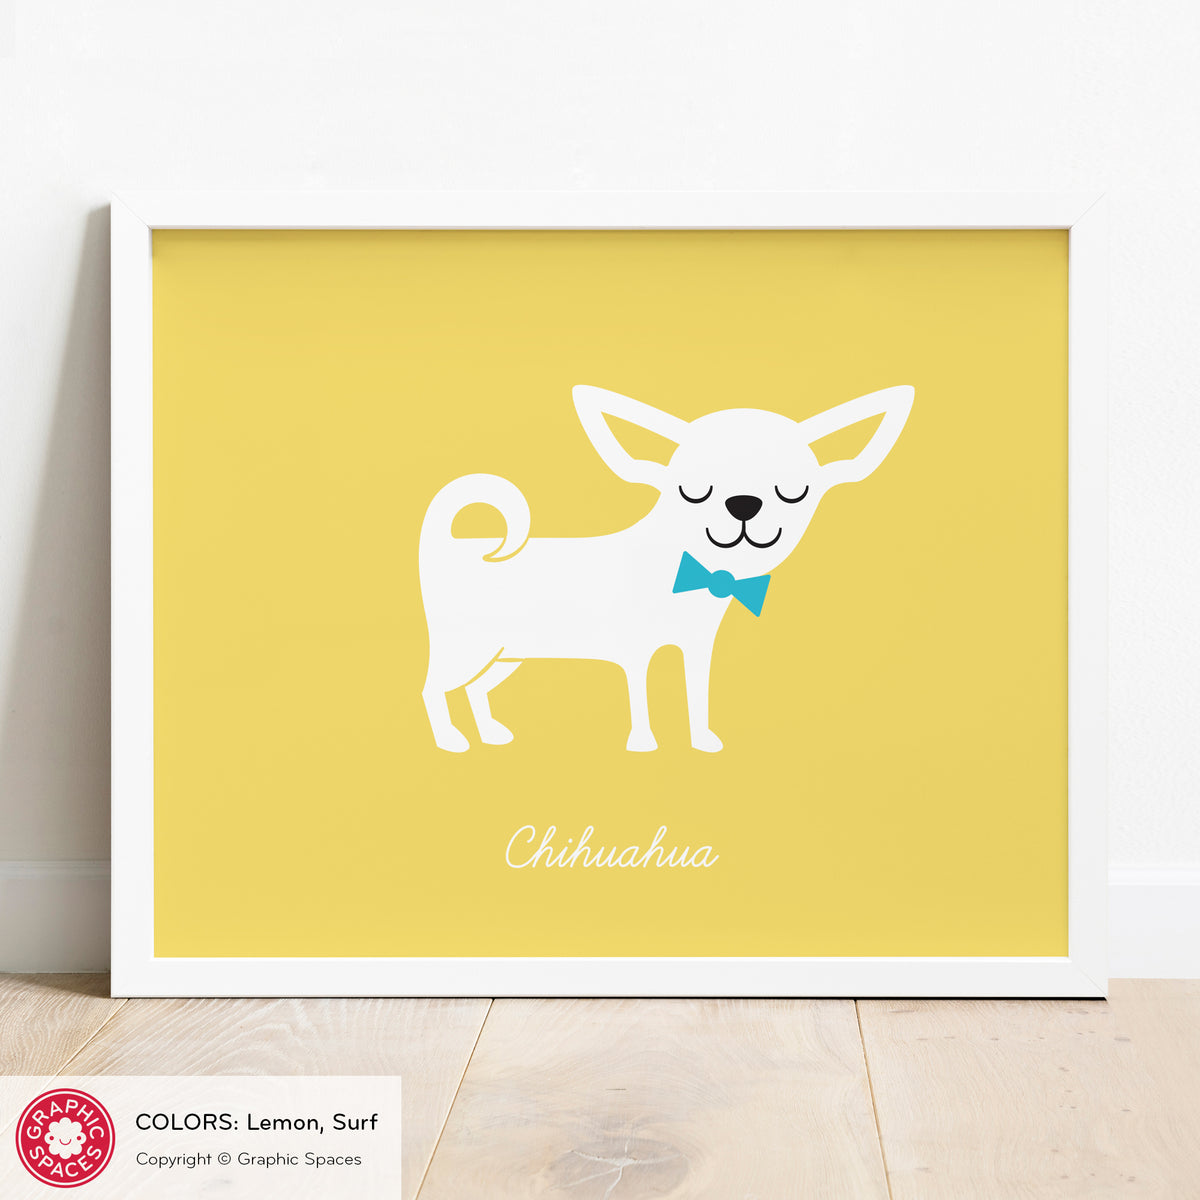 Chihuahua nursery art print, personalized.